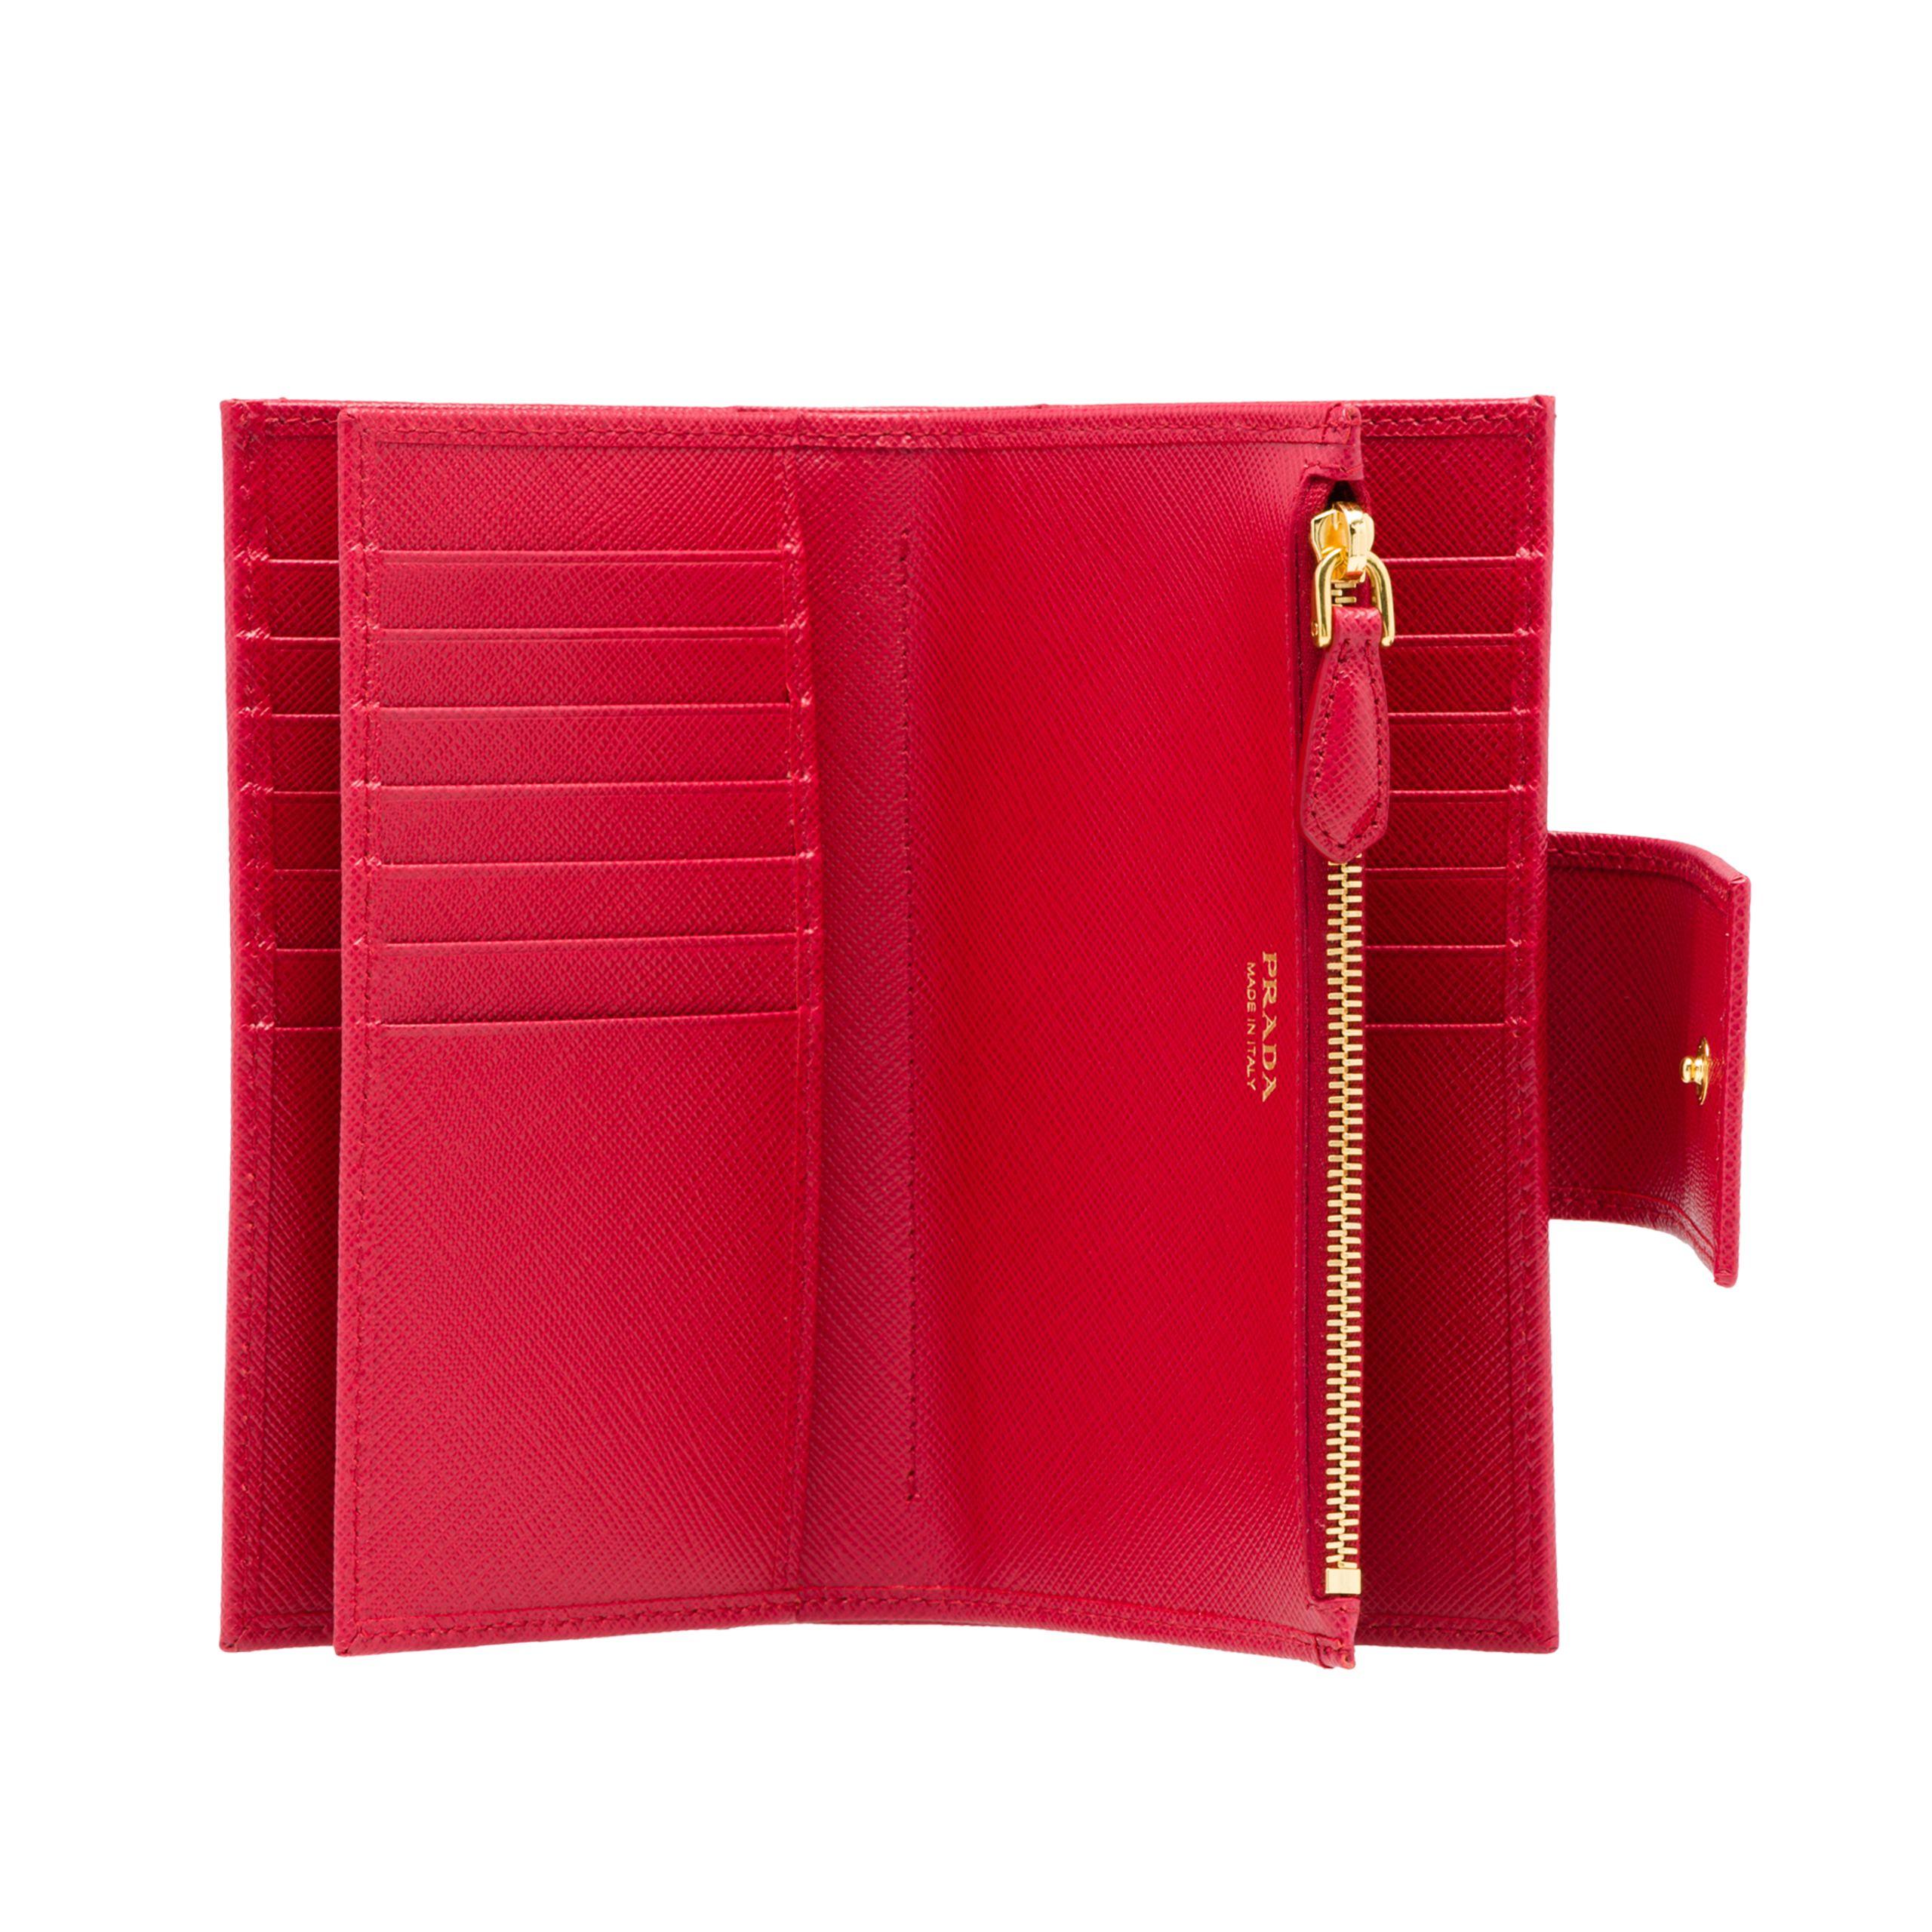 Prada Medium Saffiano Leather Wallet in Red - Save 45% - Lyst